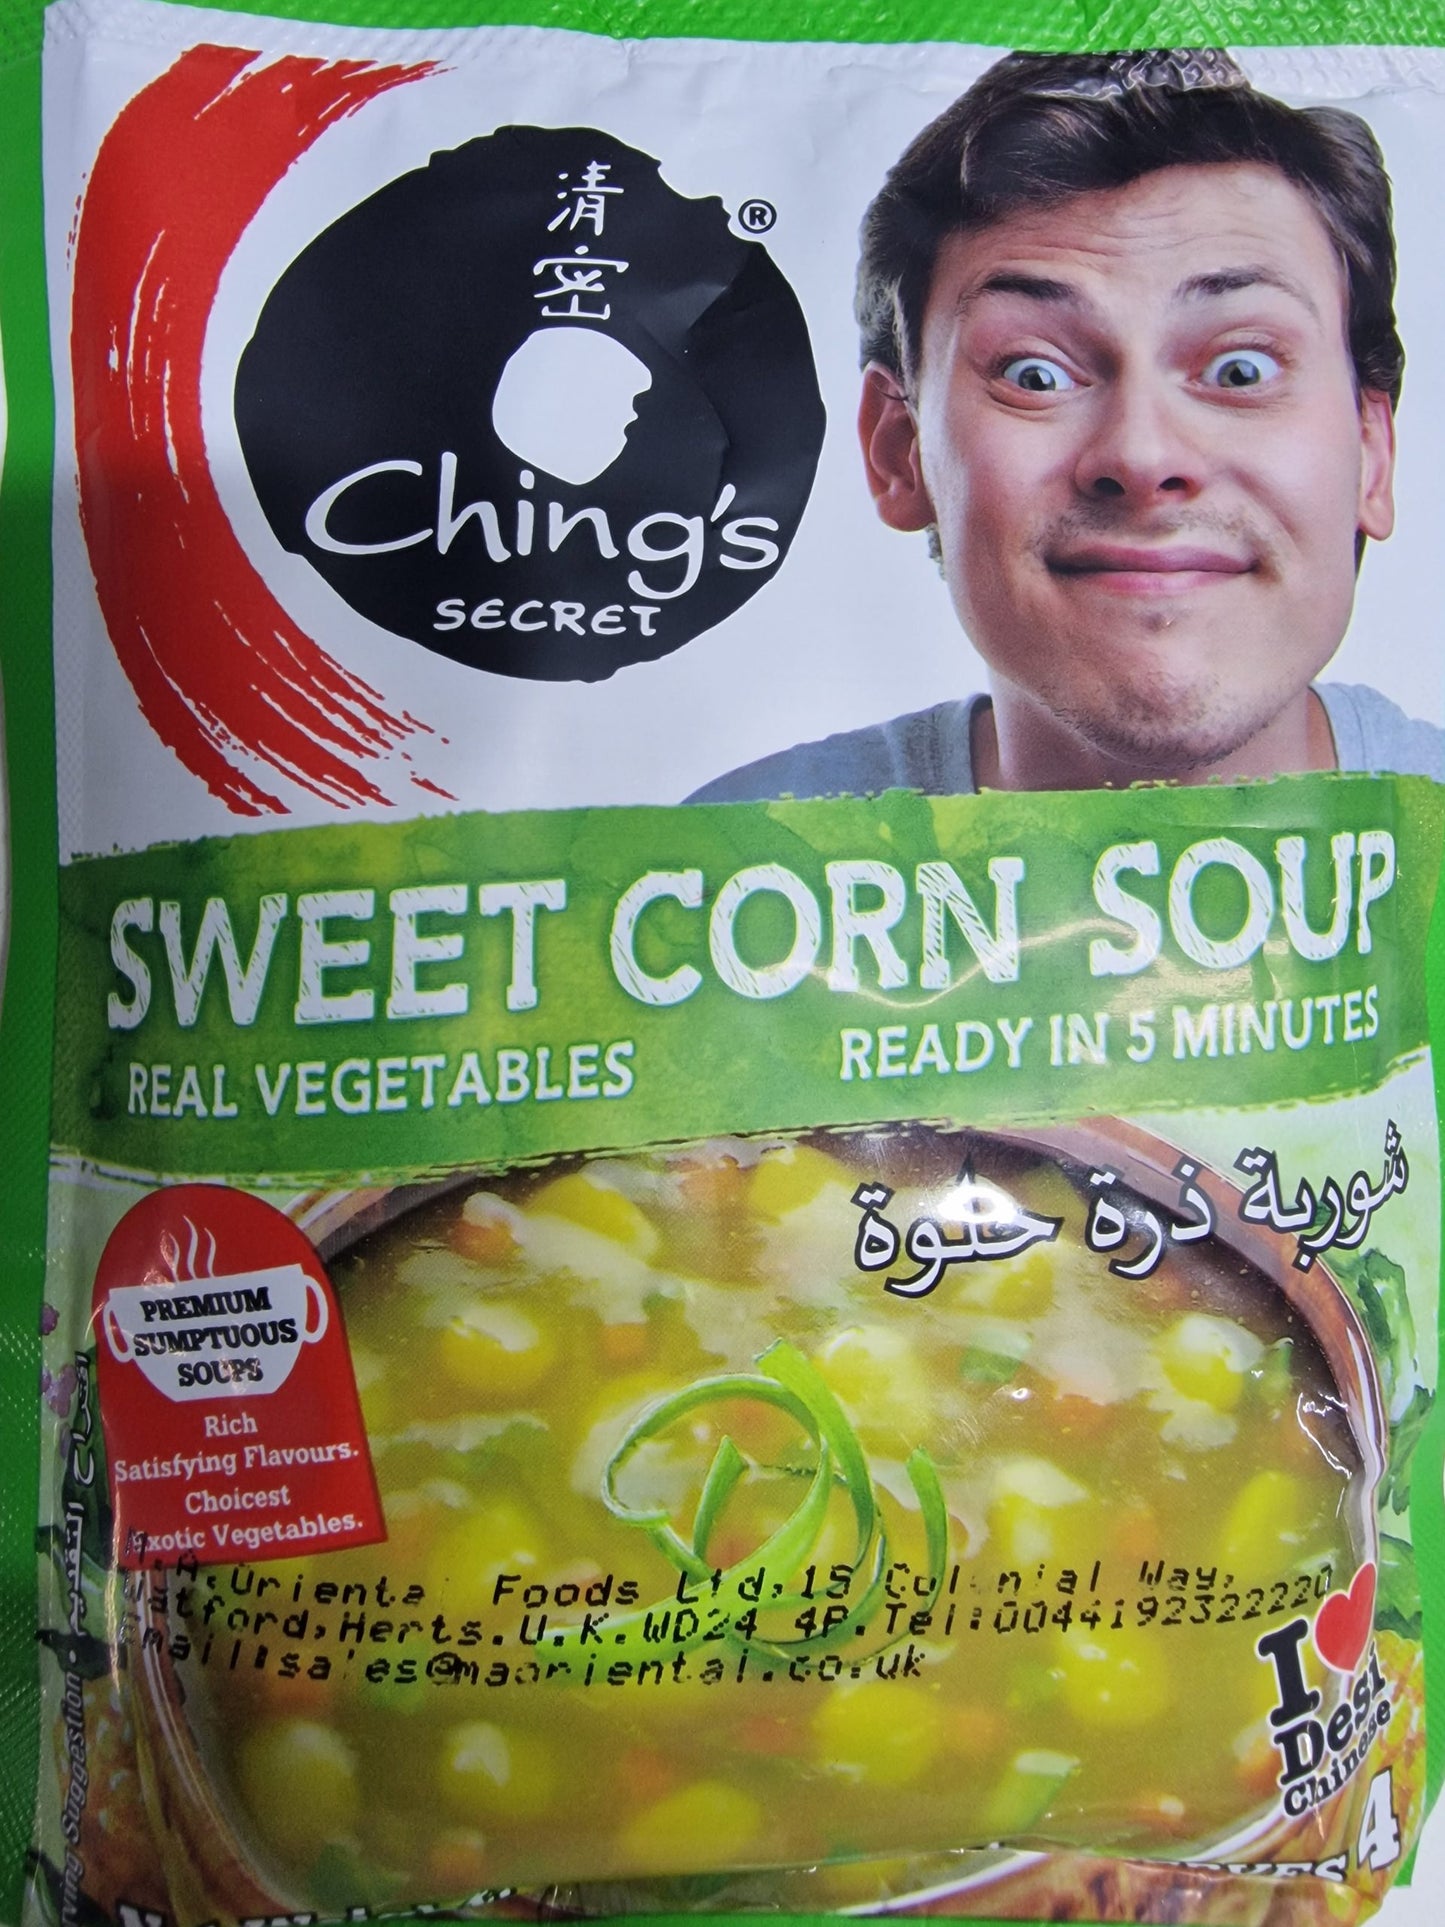 Chings Sweetcorn Veg Soup Serves 4